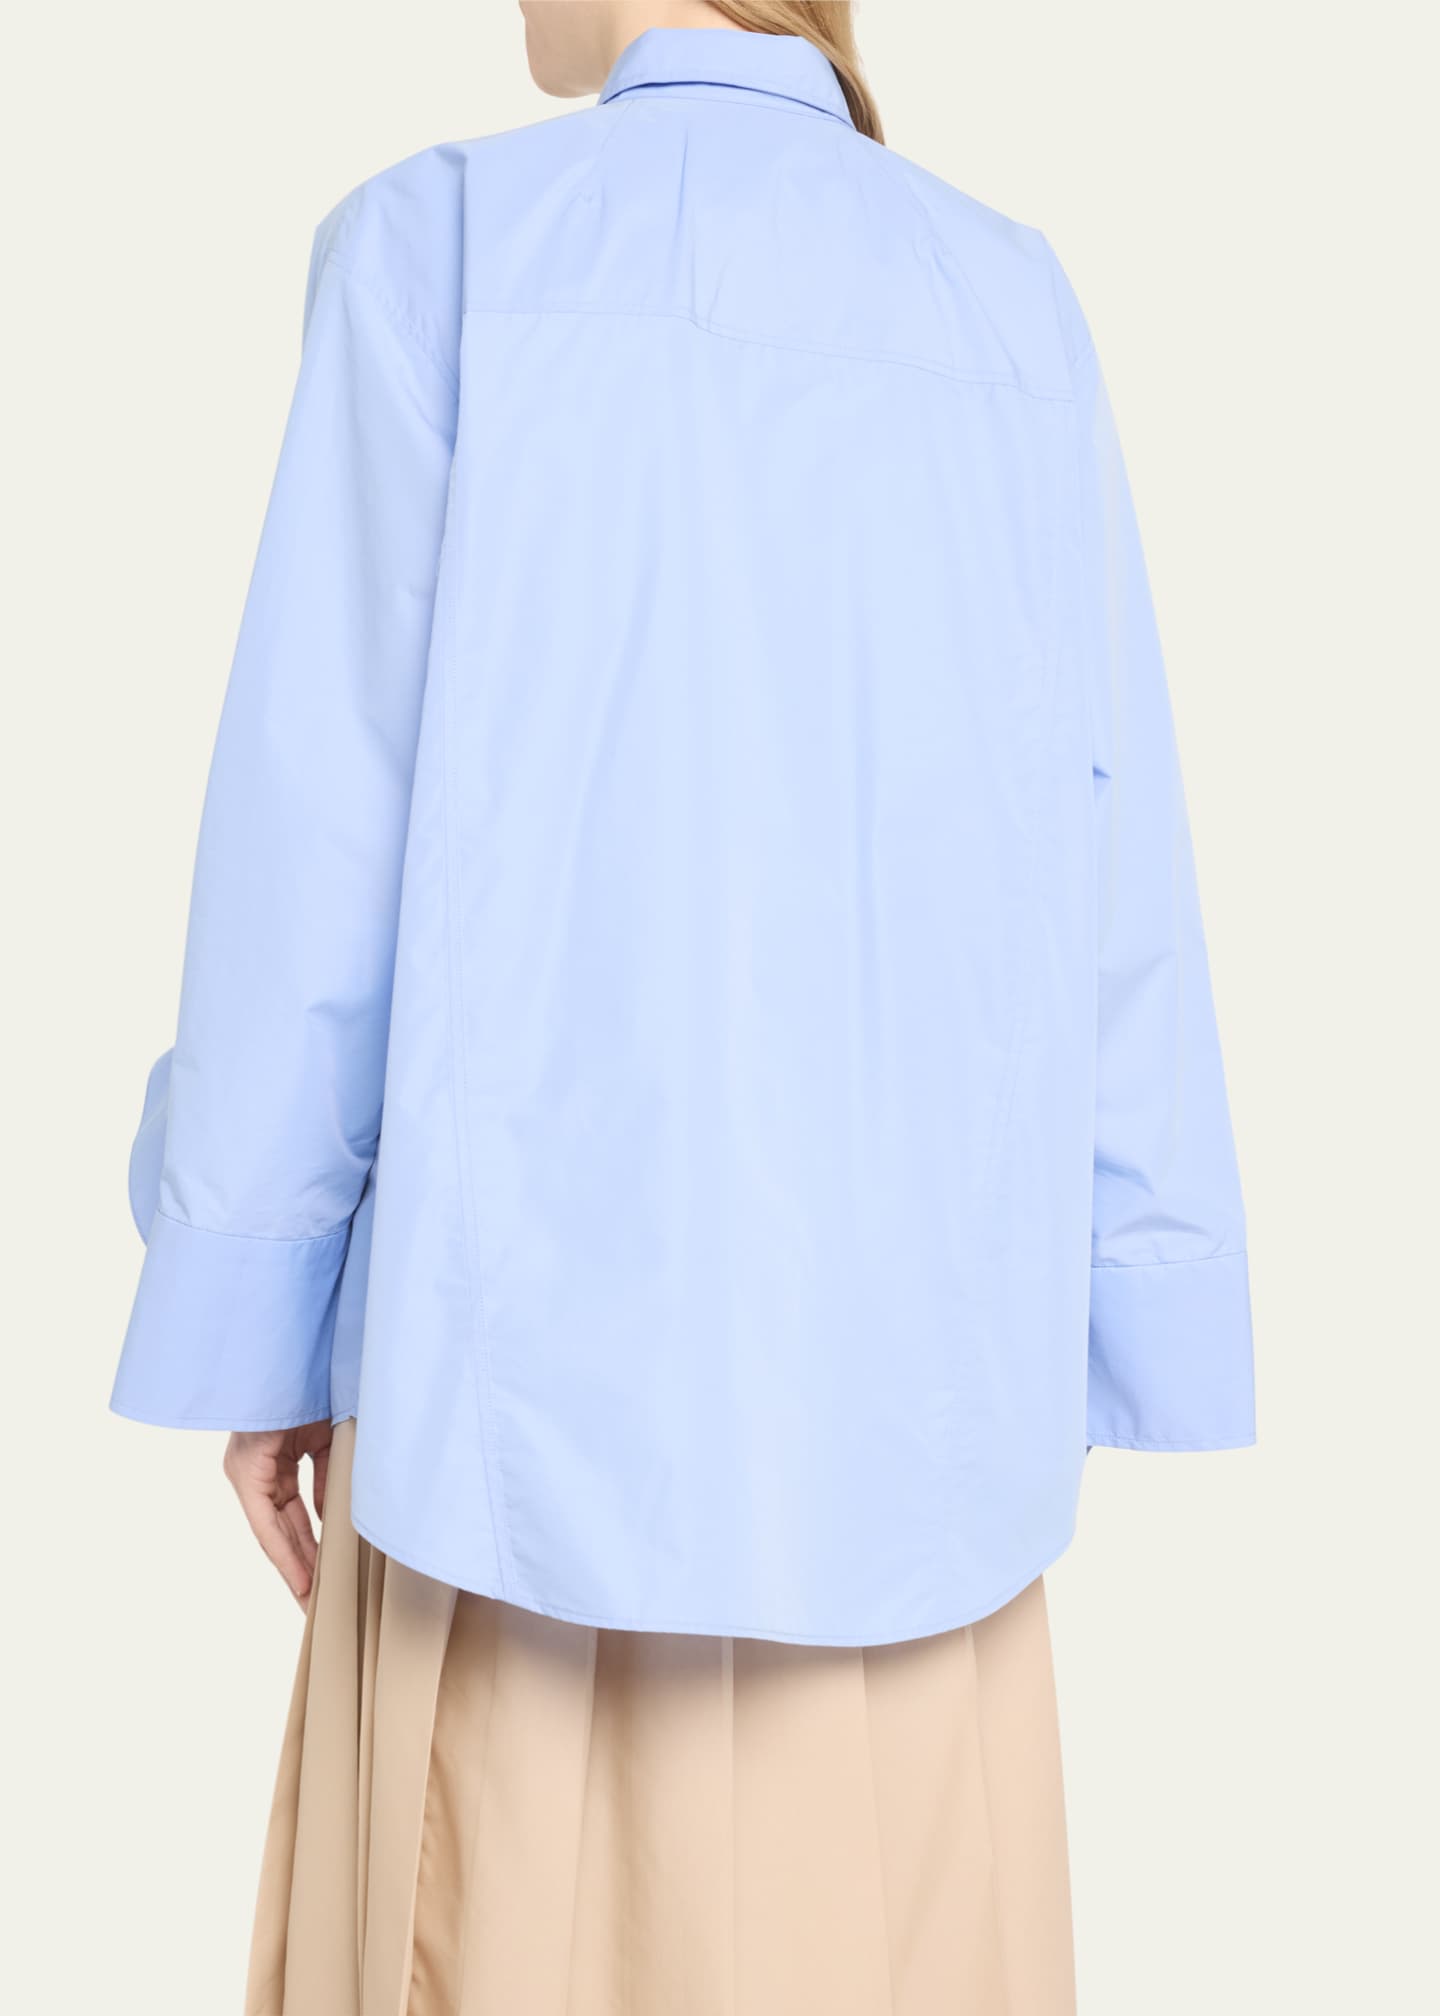 3.1 Phillip Lim Oversized Draped-Sleeve Shirt - Bergdorf Goodman